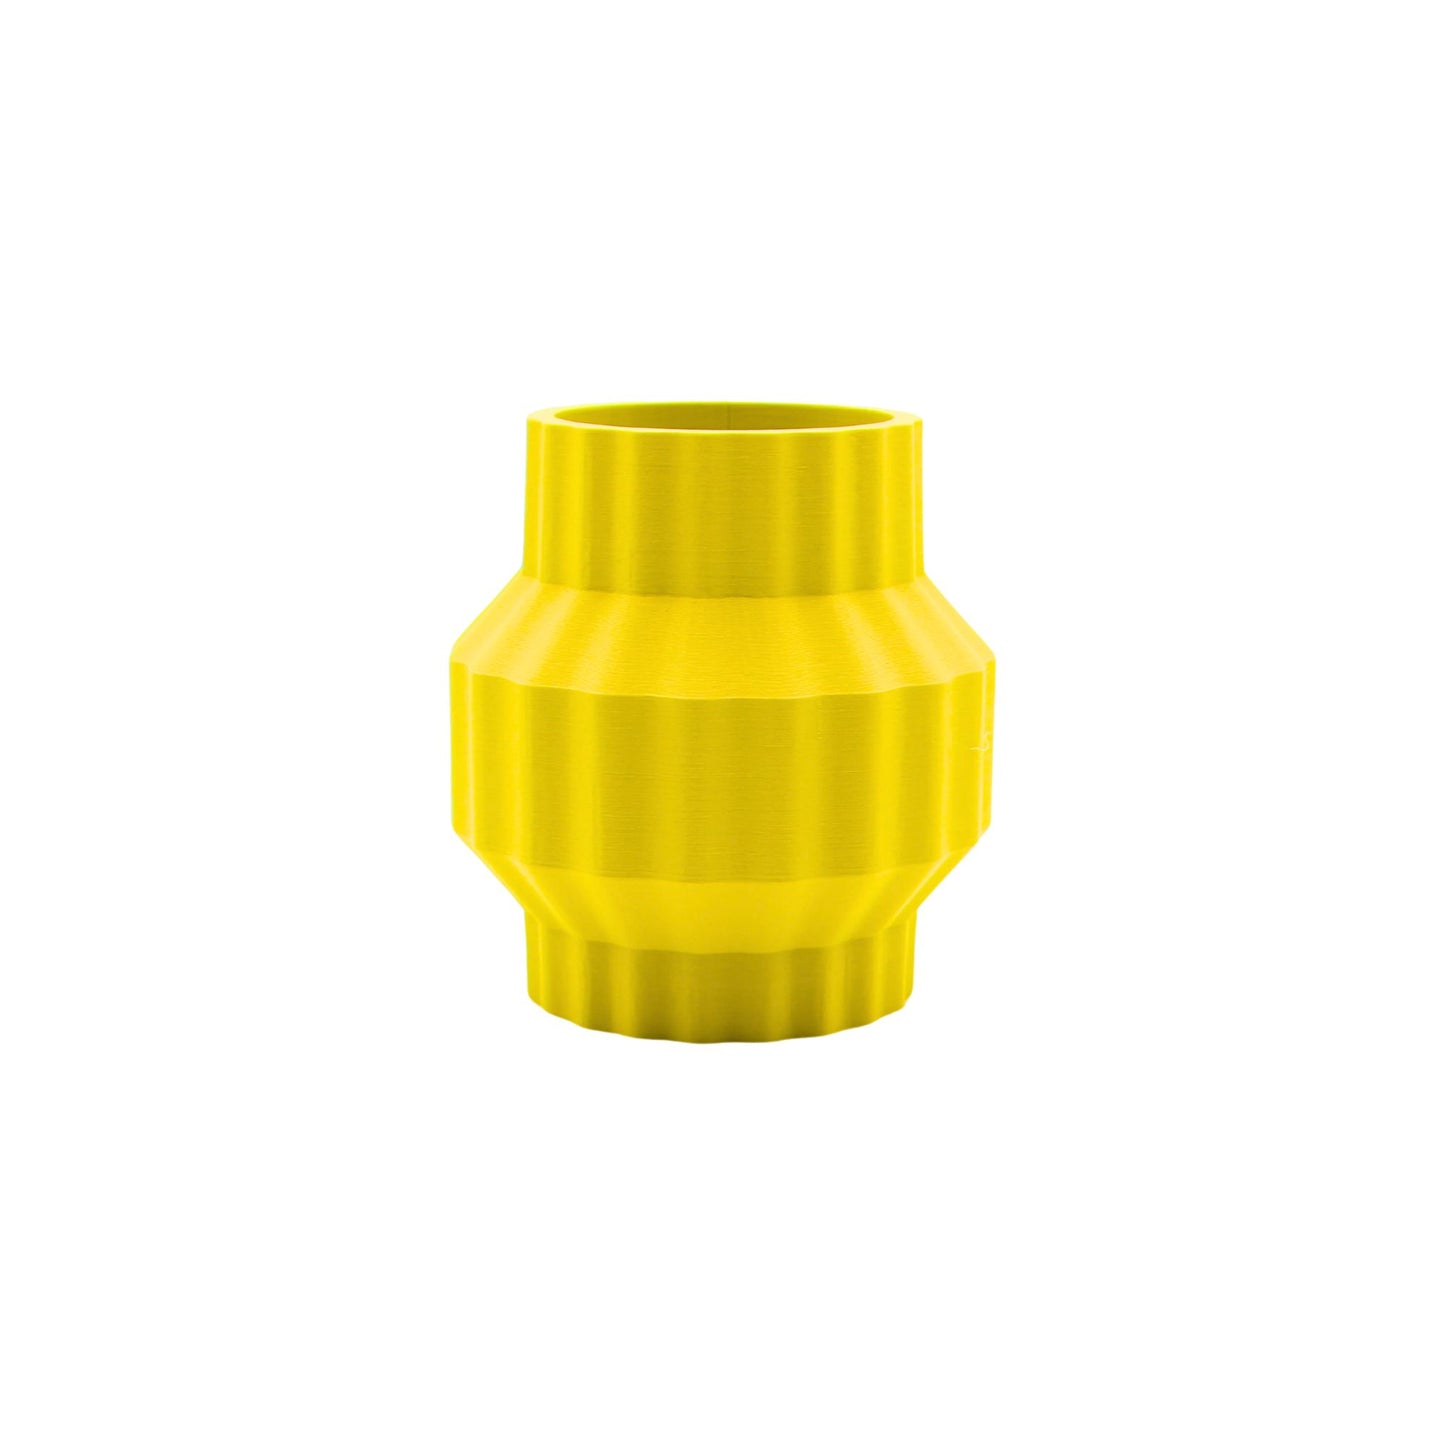 Ferrara design vase yellow edition